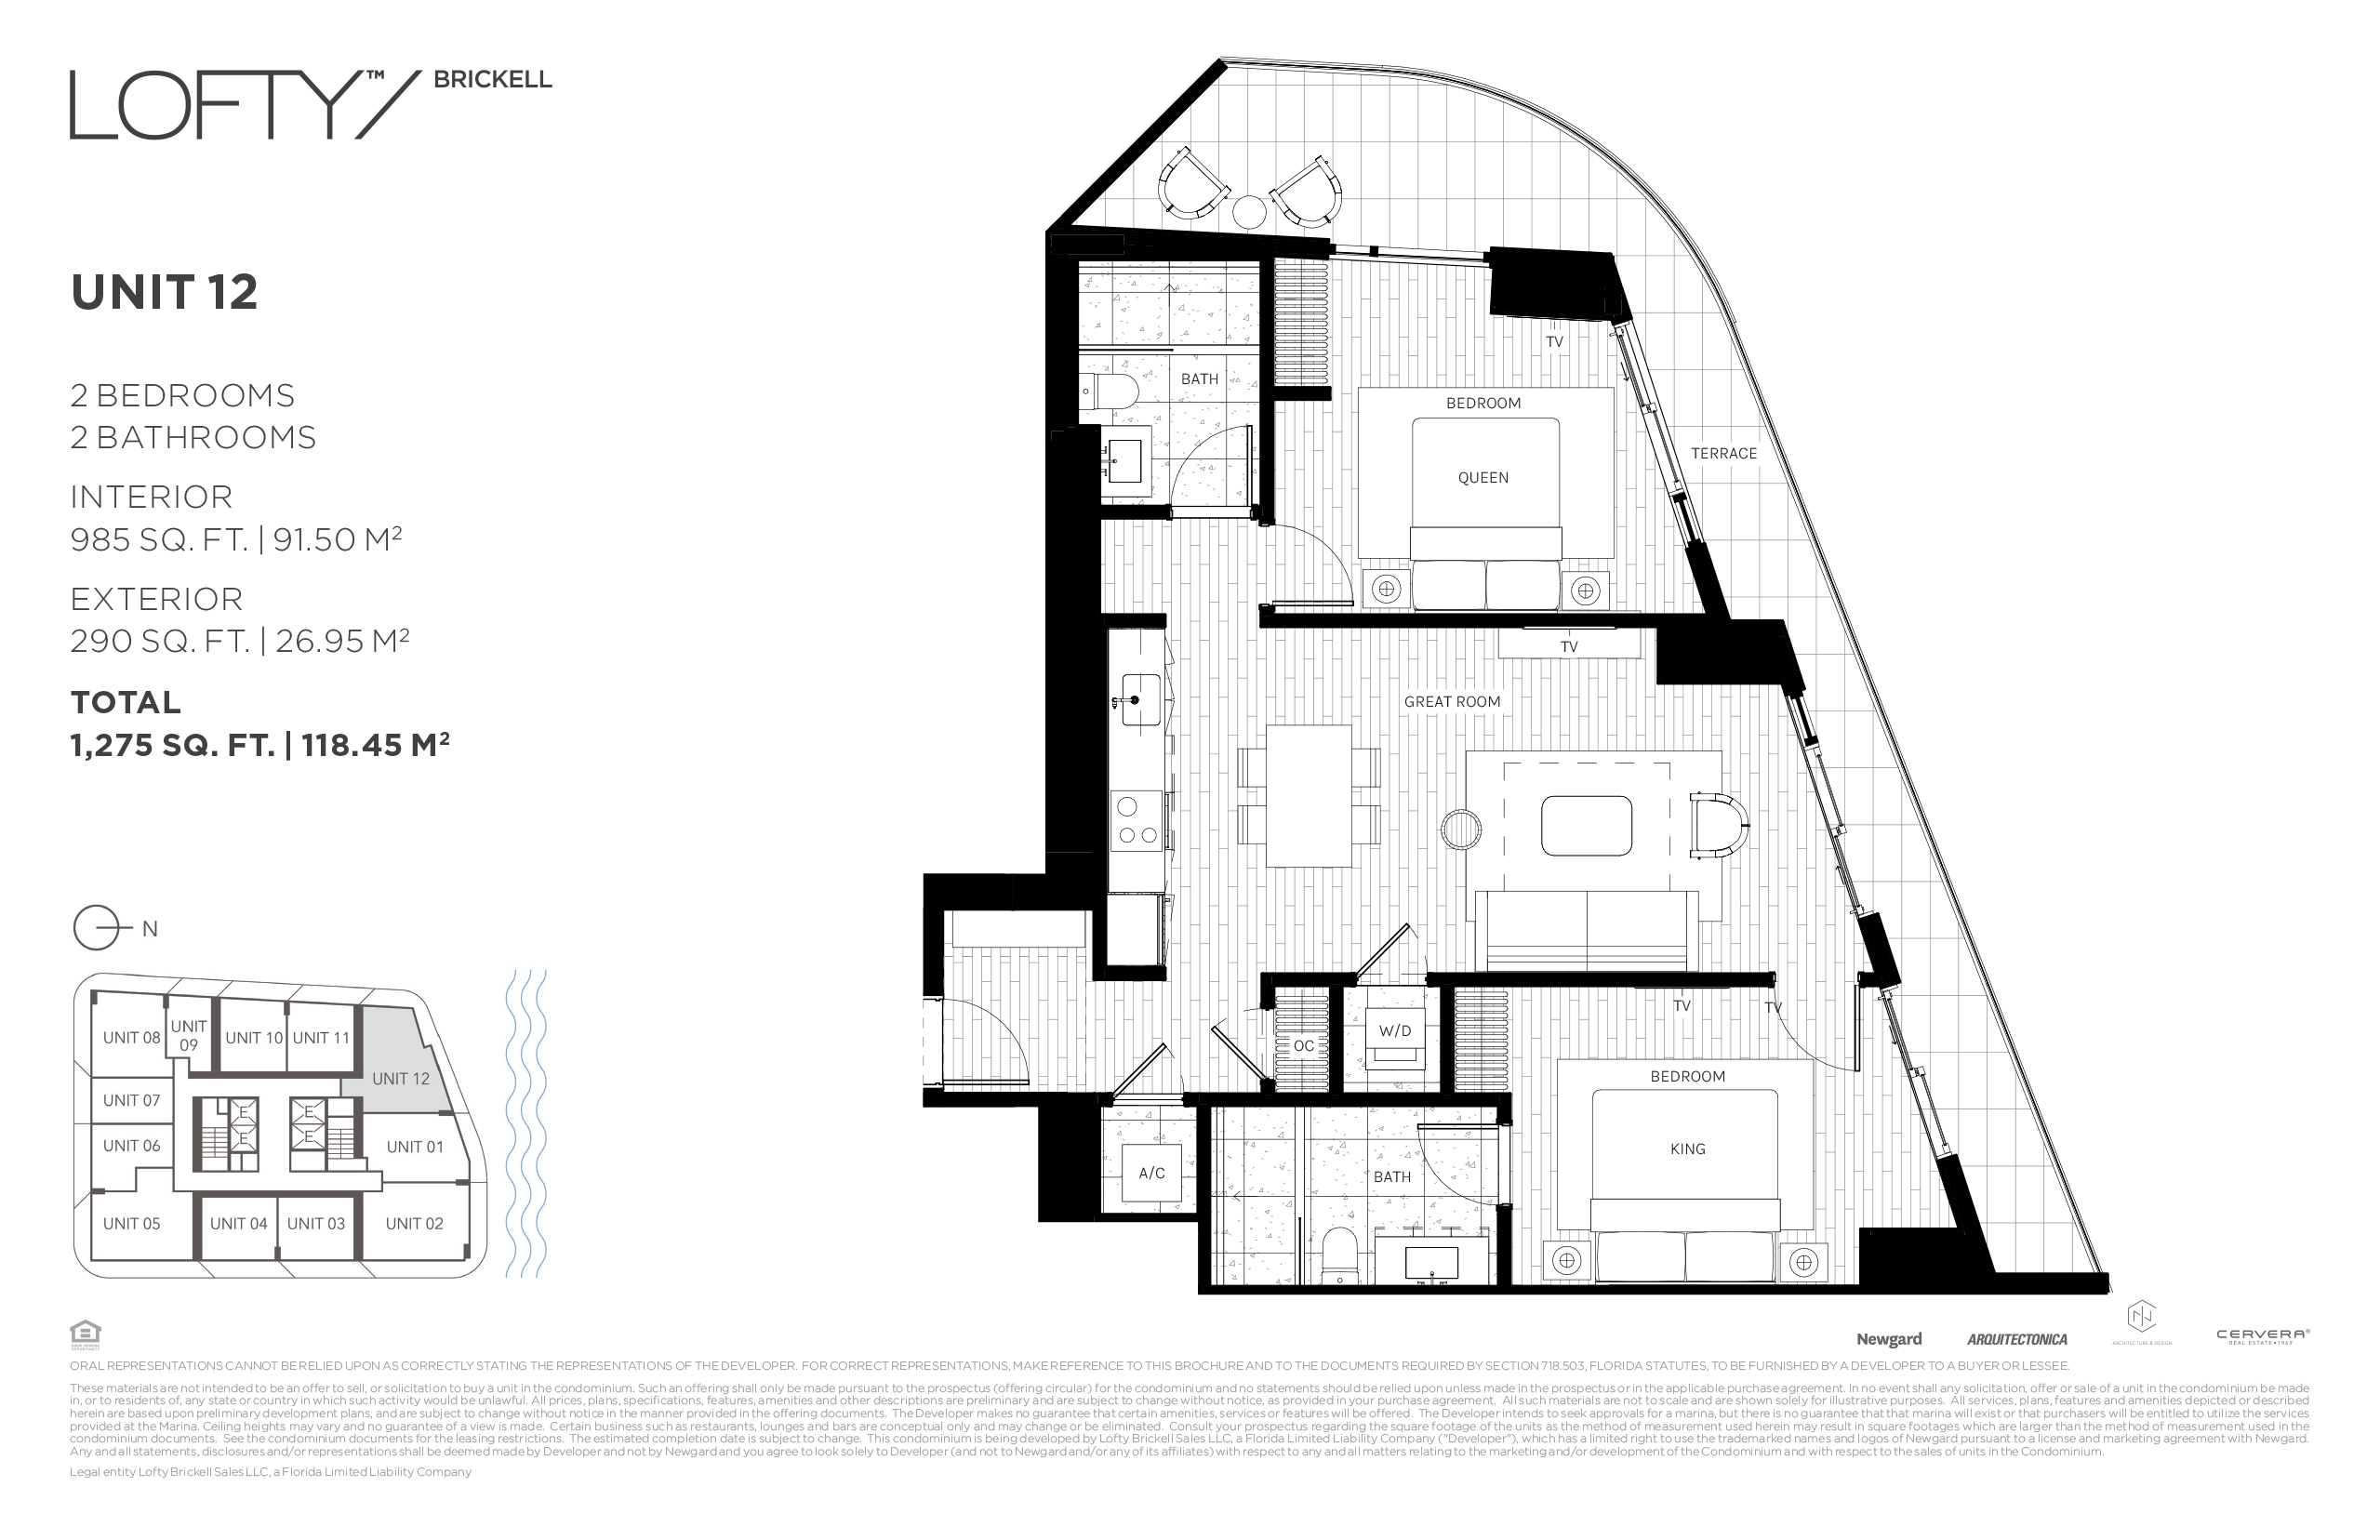 Floor Plan for Lofty Brickell Floorplans, Unit 12